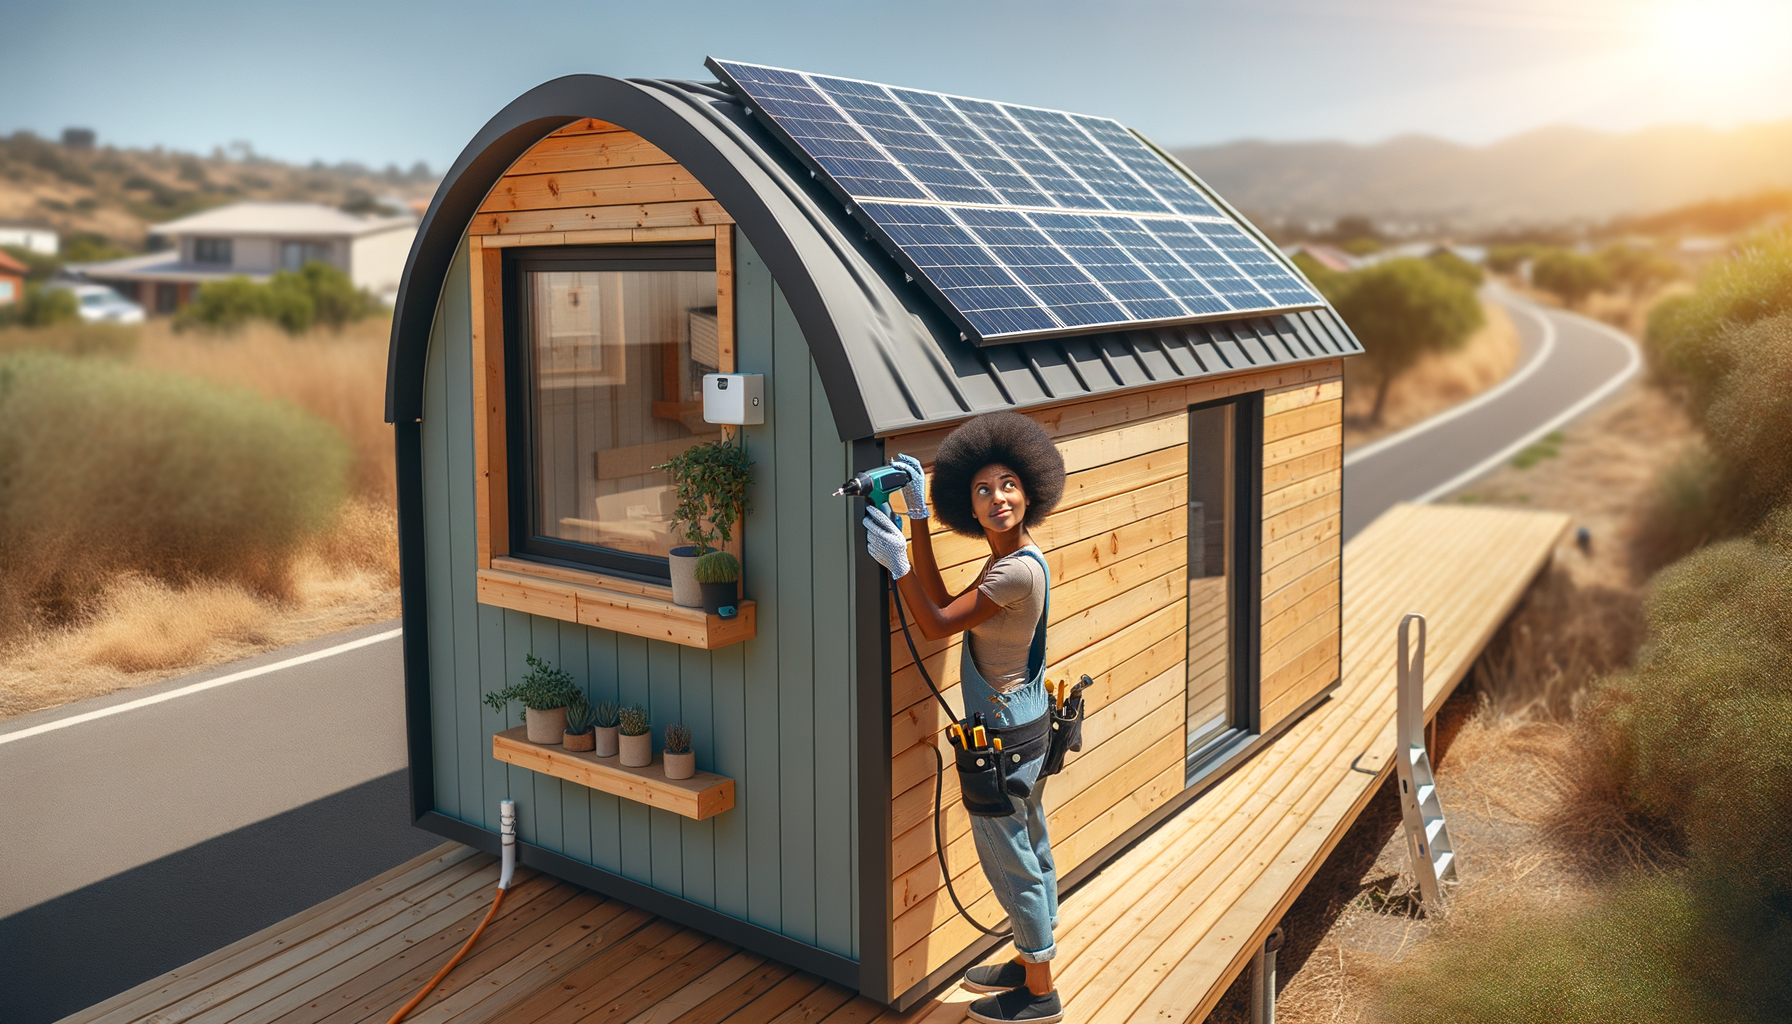 ALT: Solar panel installation on tiny house